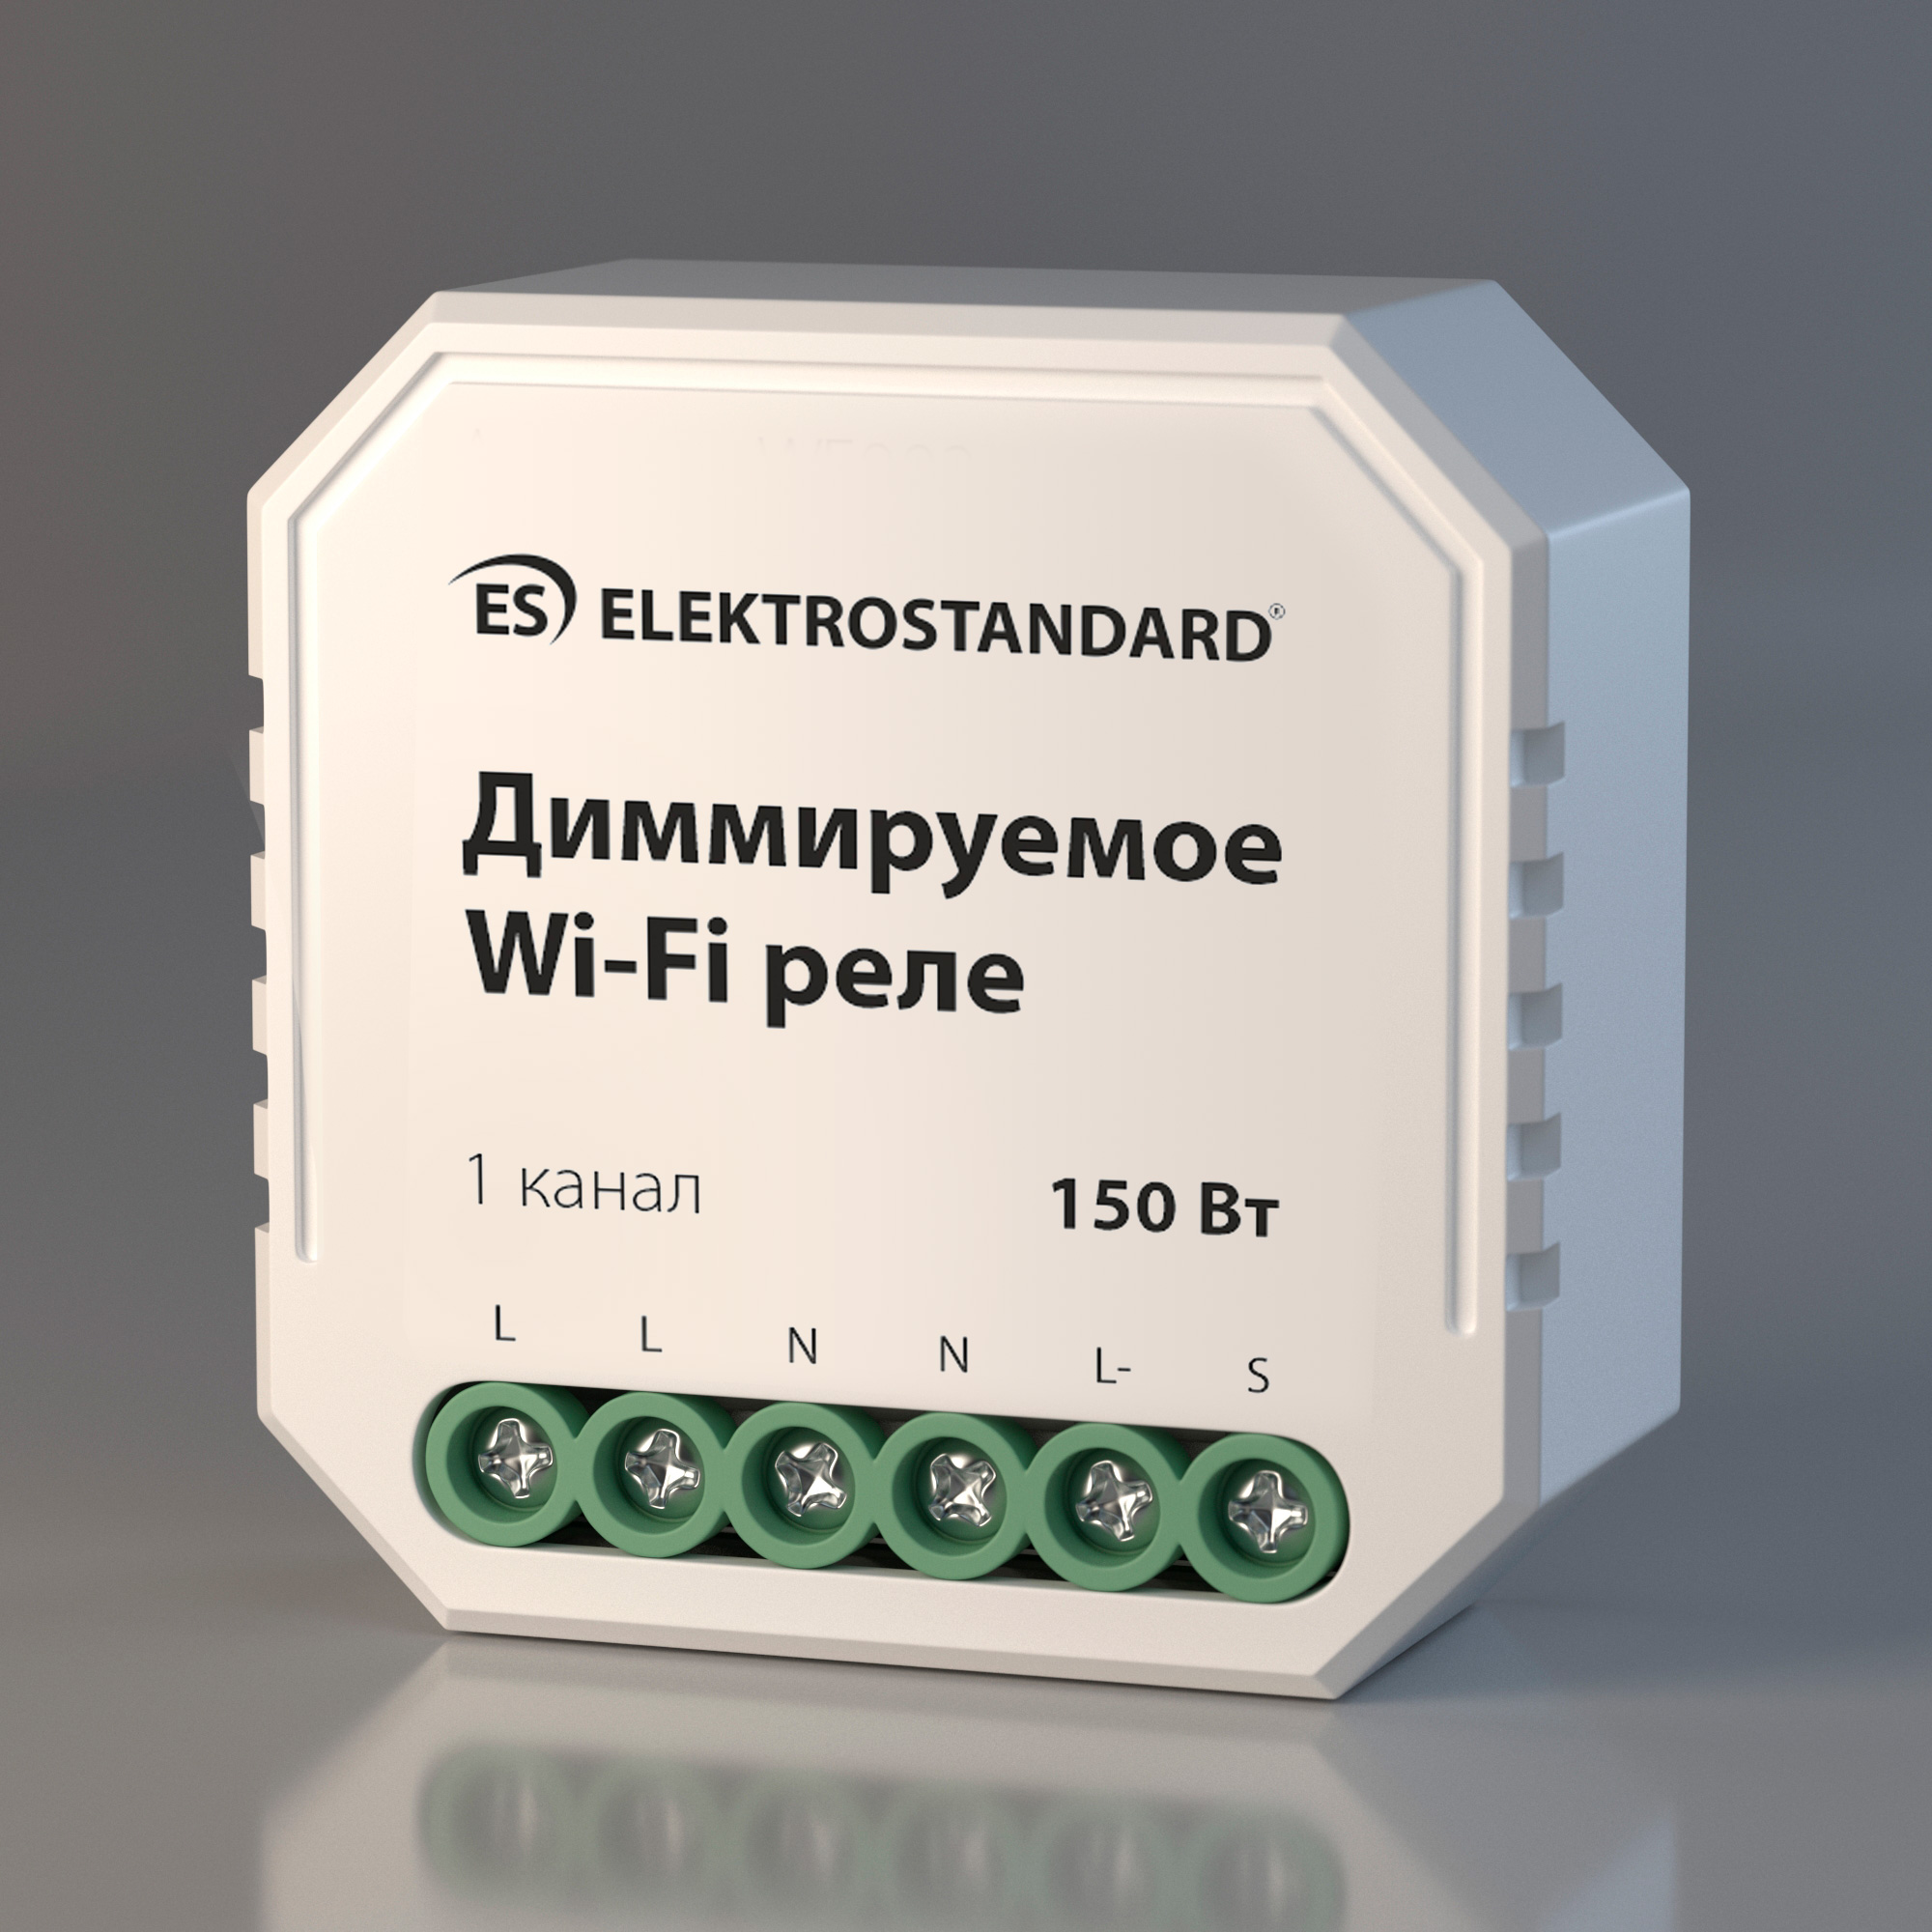 Elektrostandard 76002/00 диммируемое Wi-Fi реле